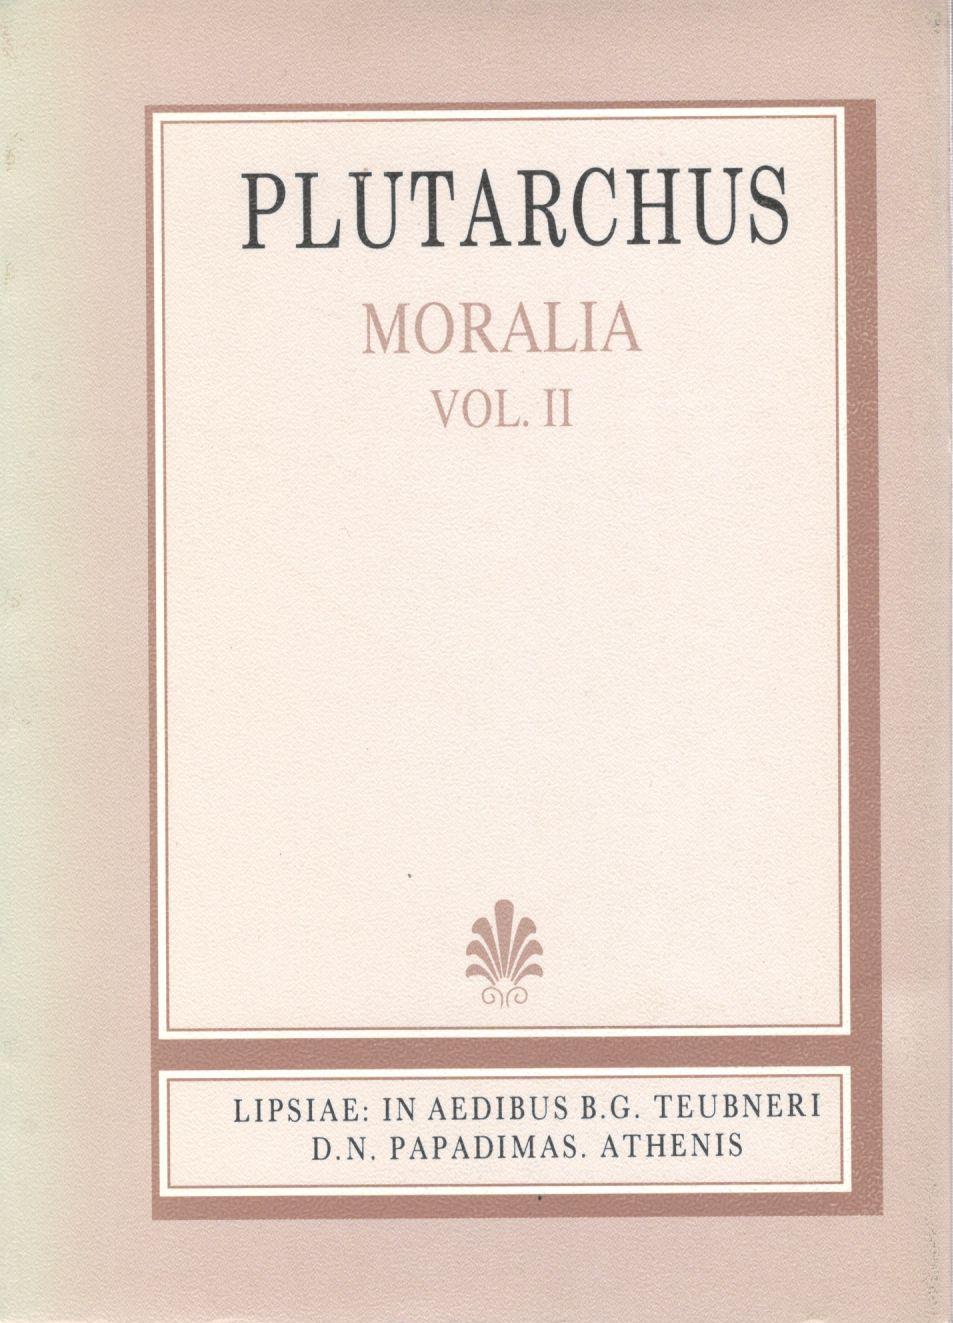 Plutarchi, Moralia, Vol. II, [Πλουτάρχου, Ηθικά, τ. Β